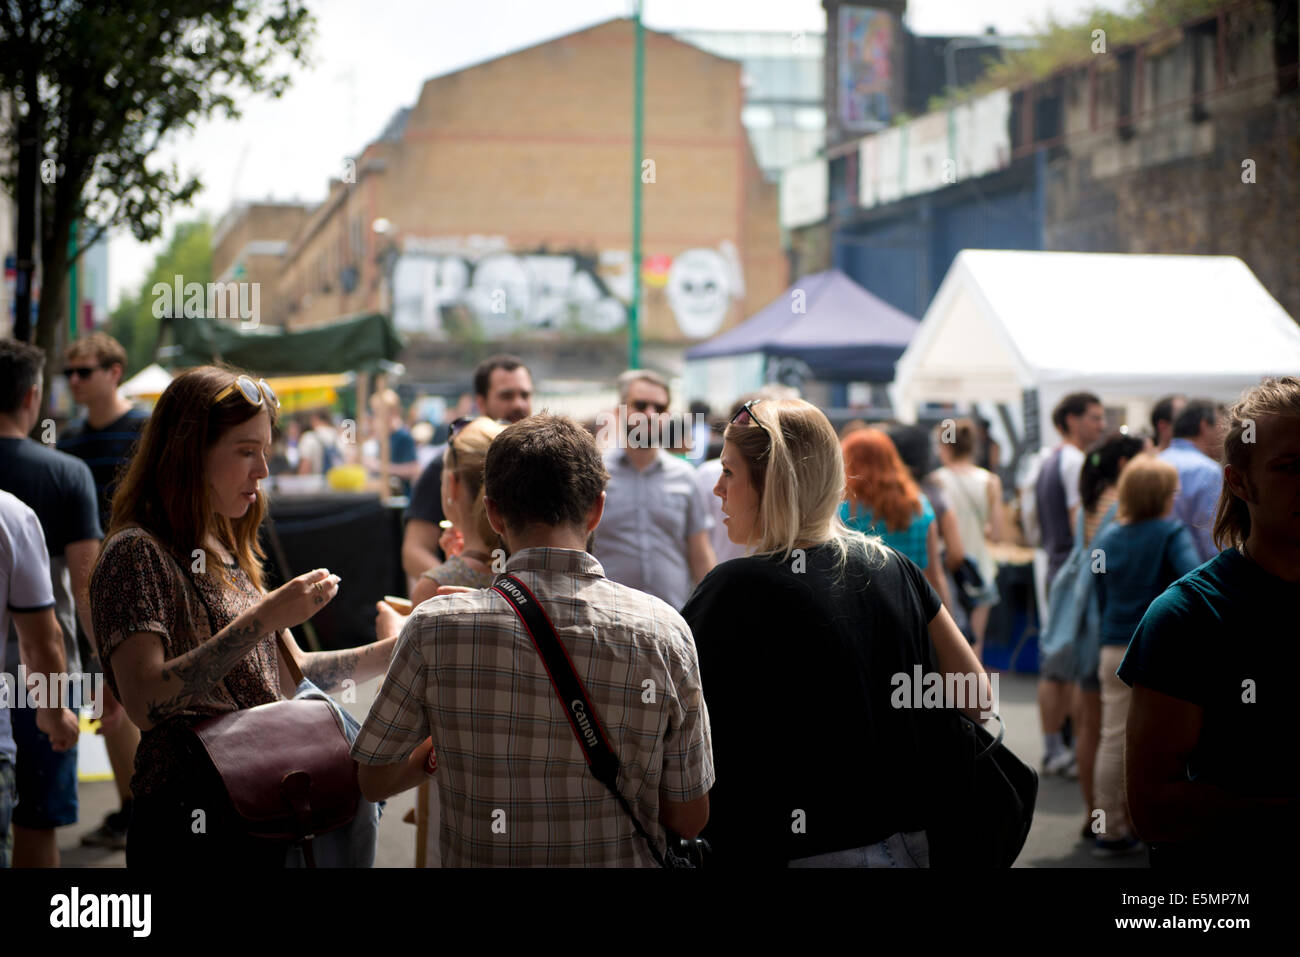 Group of people among the crowds on Brick Lane, East London, UK 2014 Stock Photo